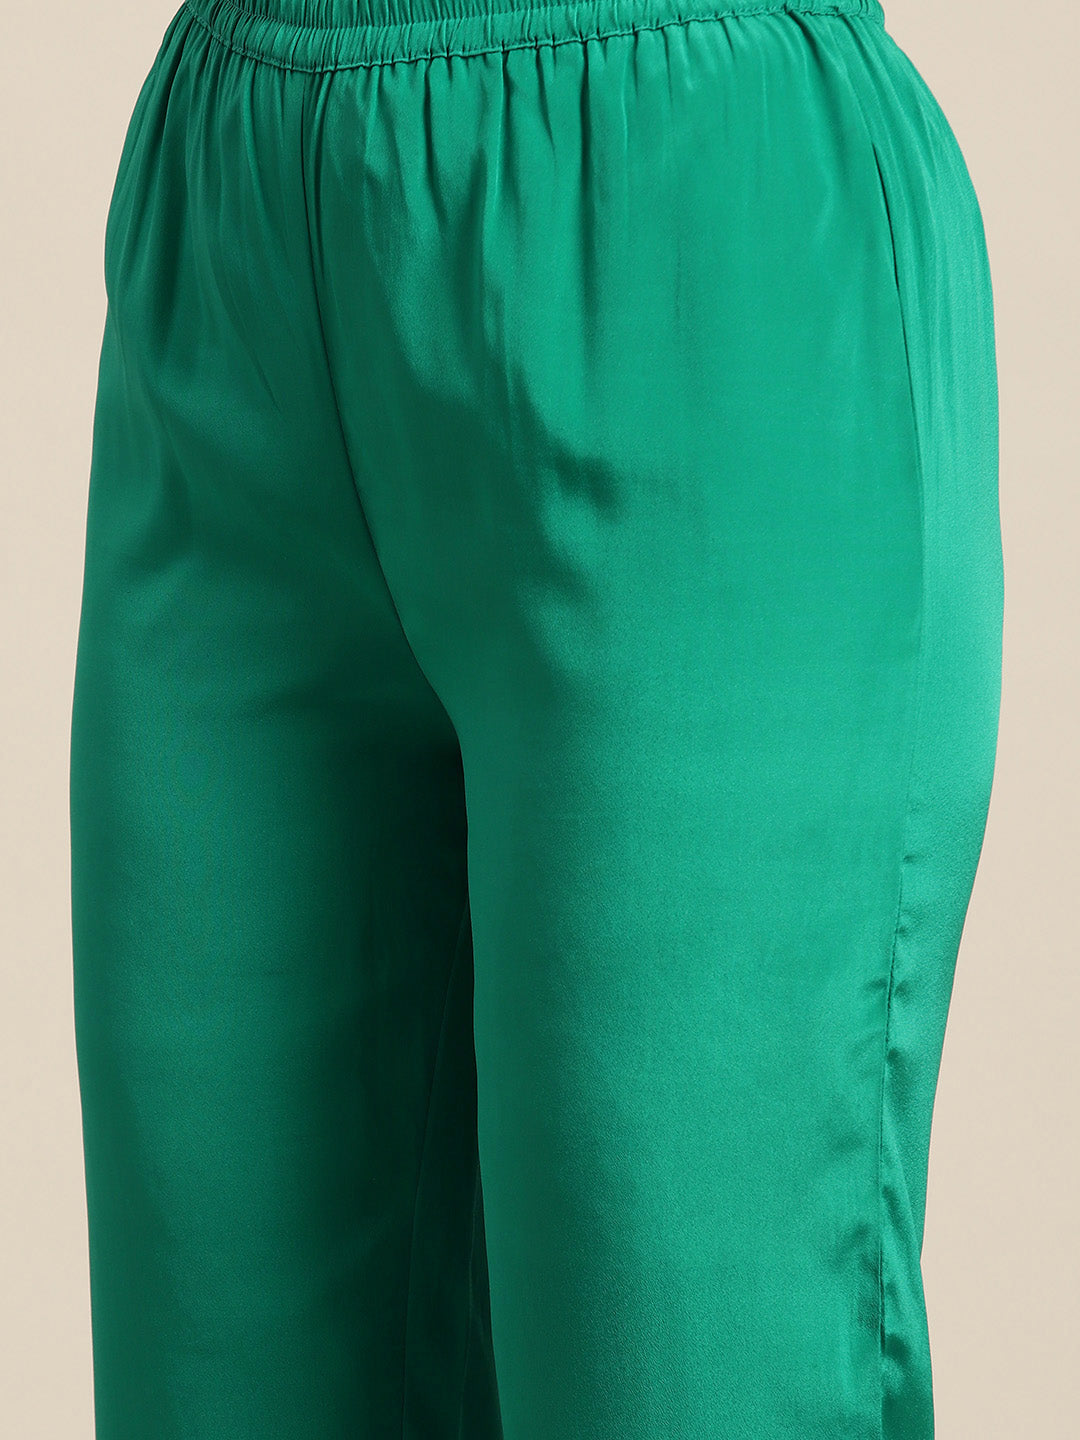 Green solid crepe shirt and pant set